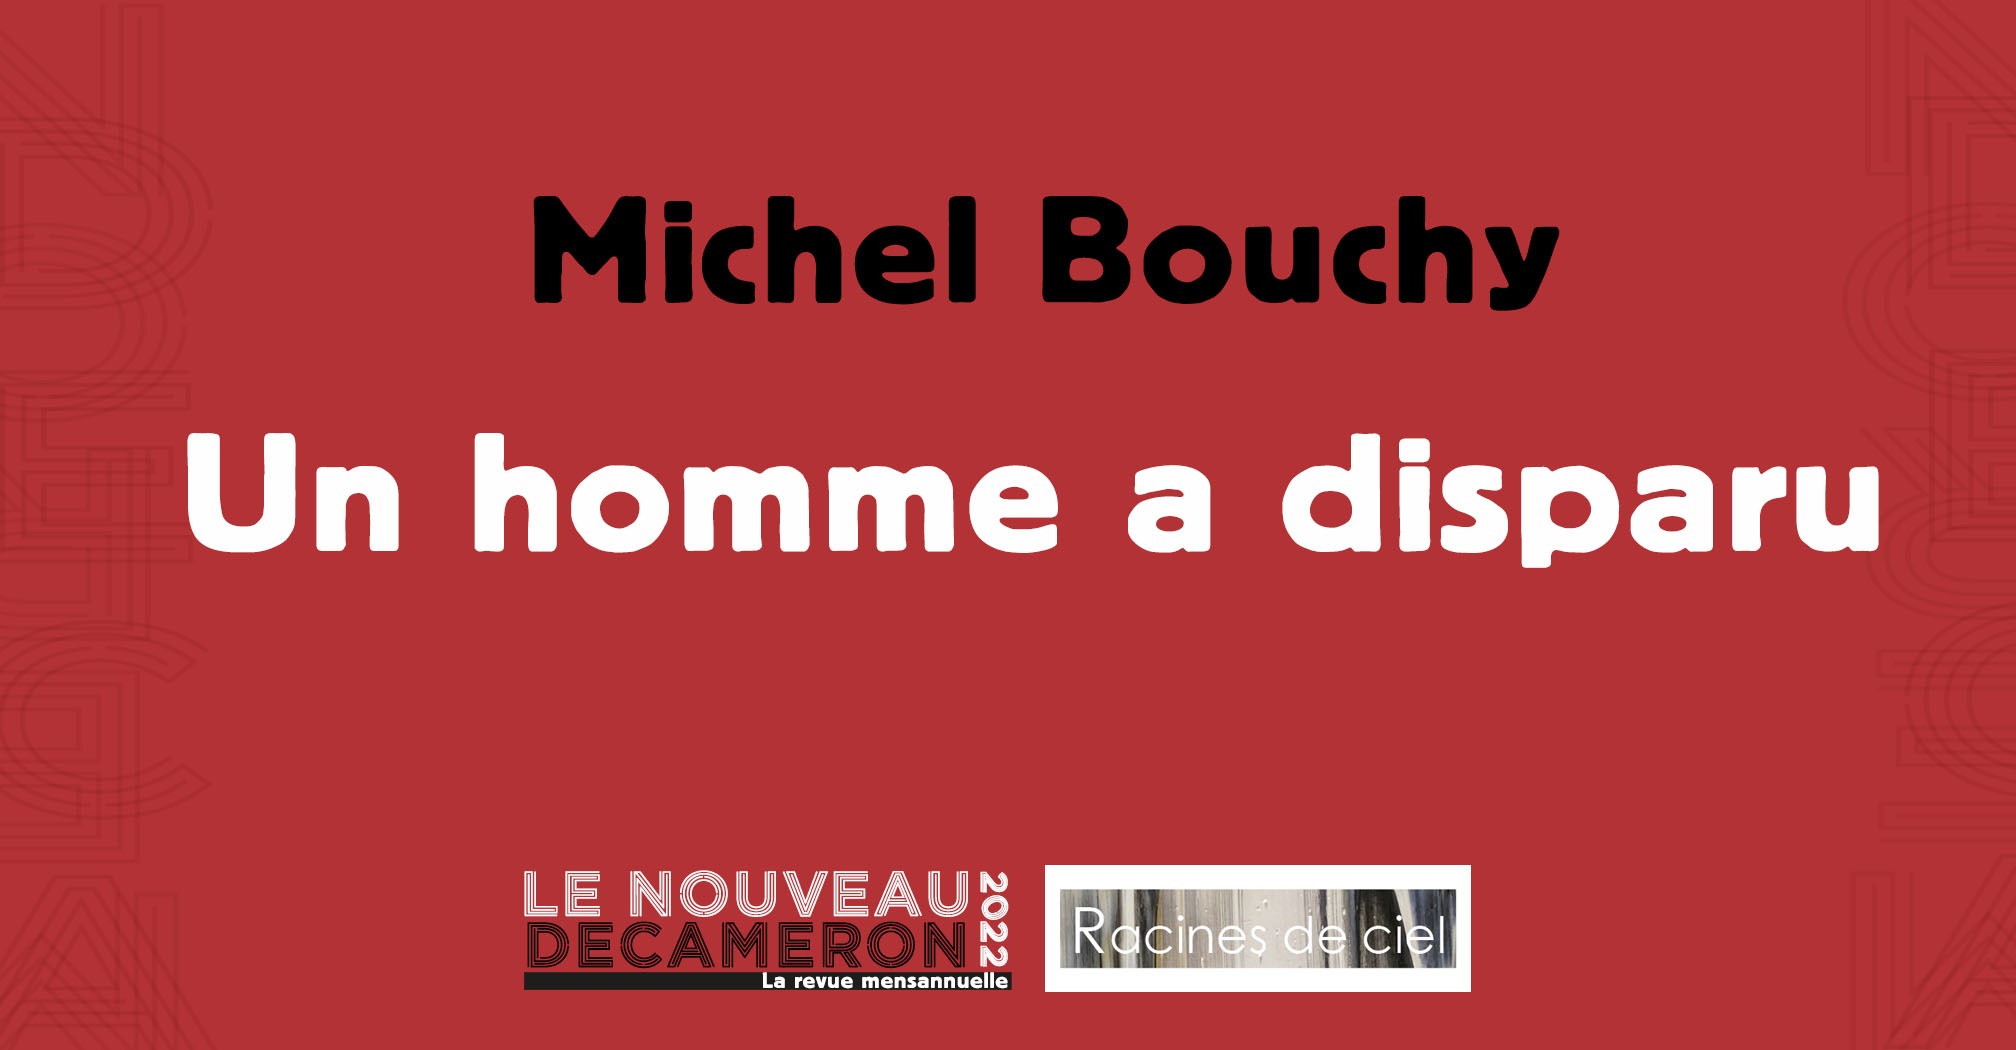 Michel Bouchy - Un homme a disparu